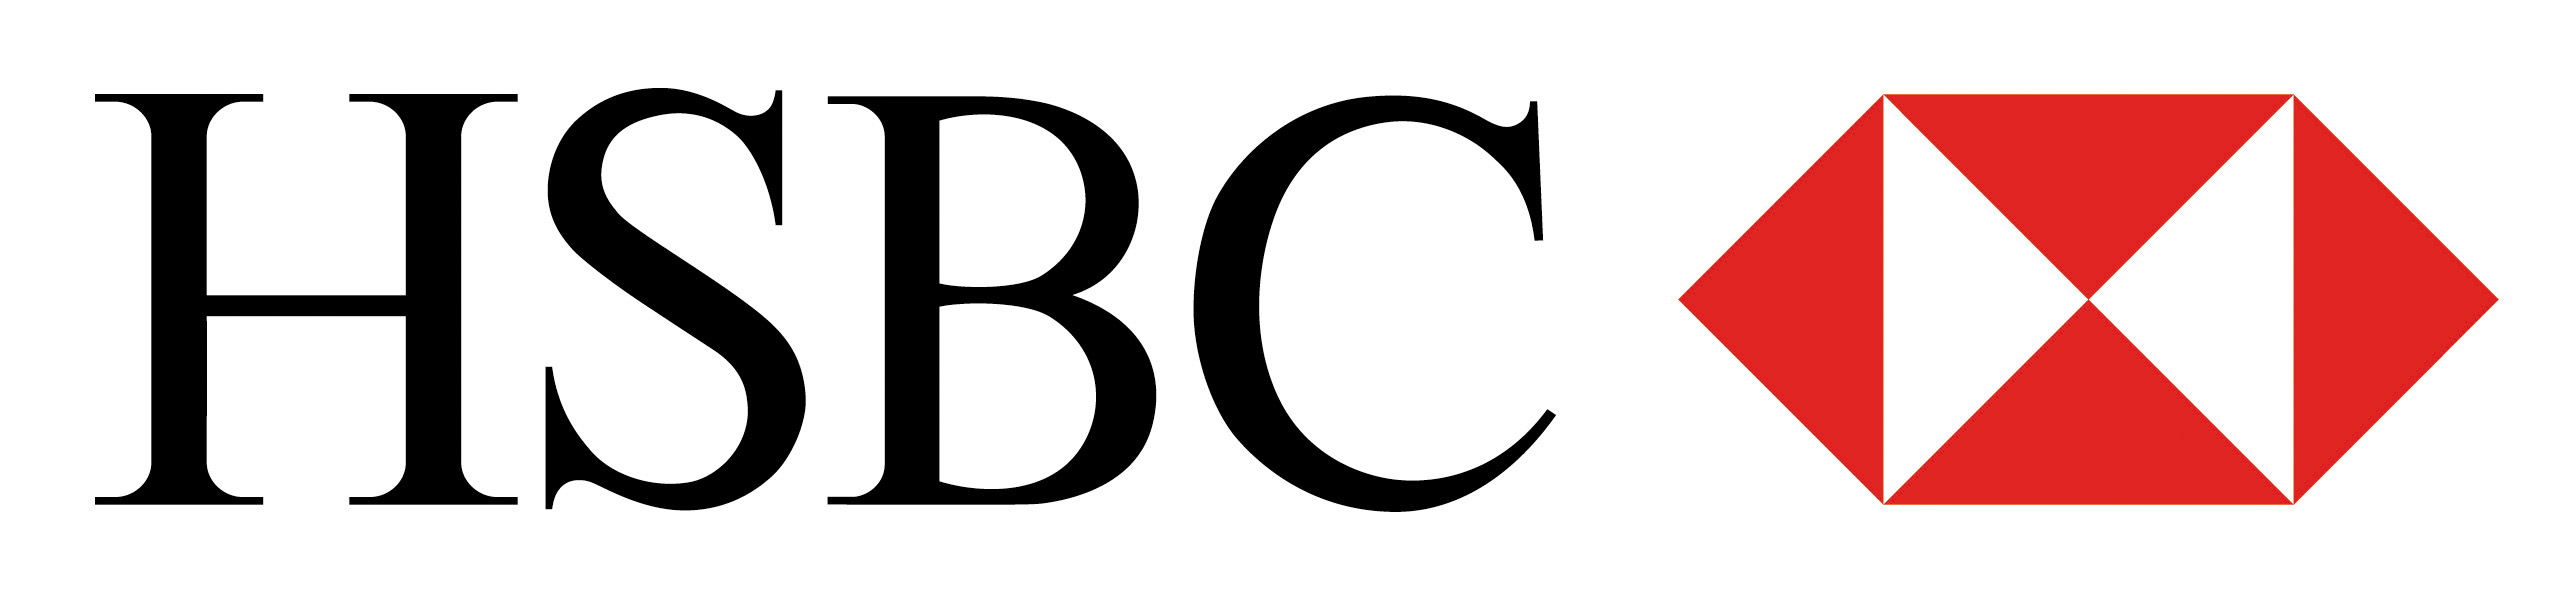 HSBC stock logo